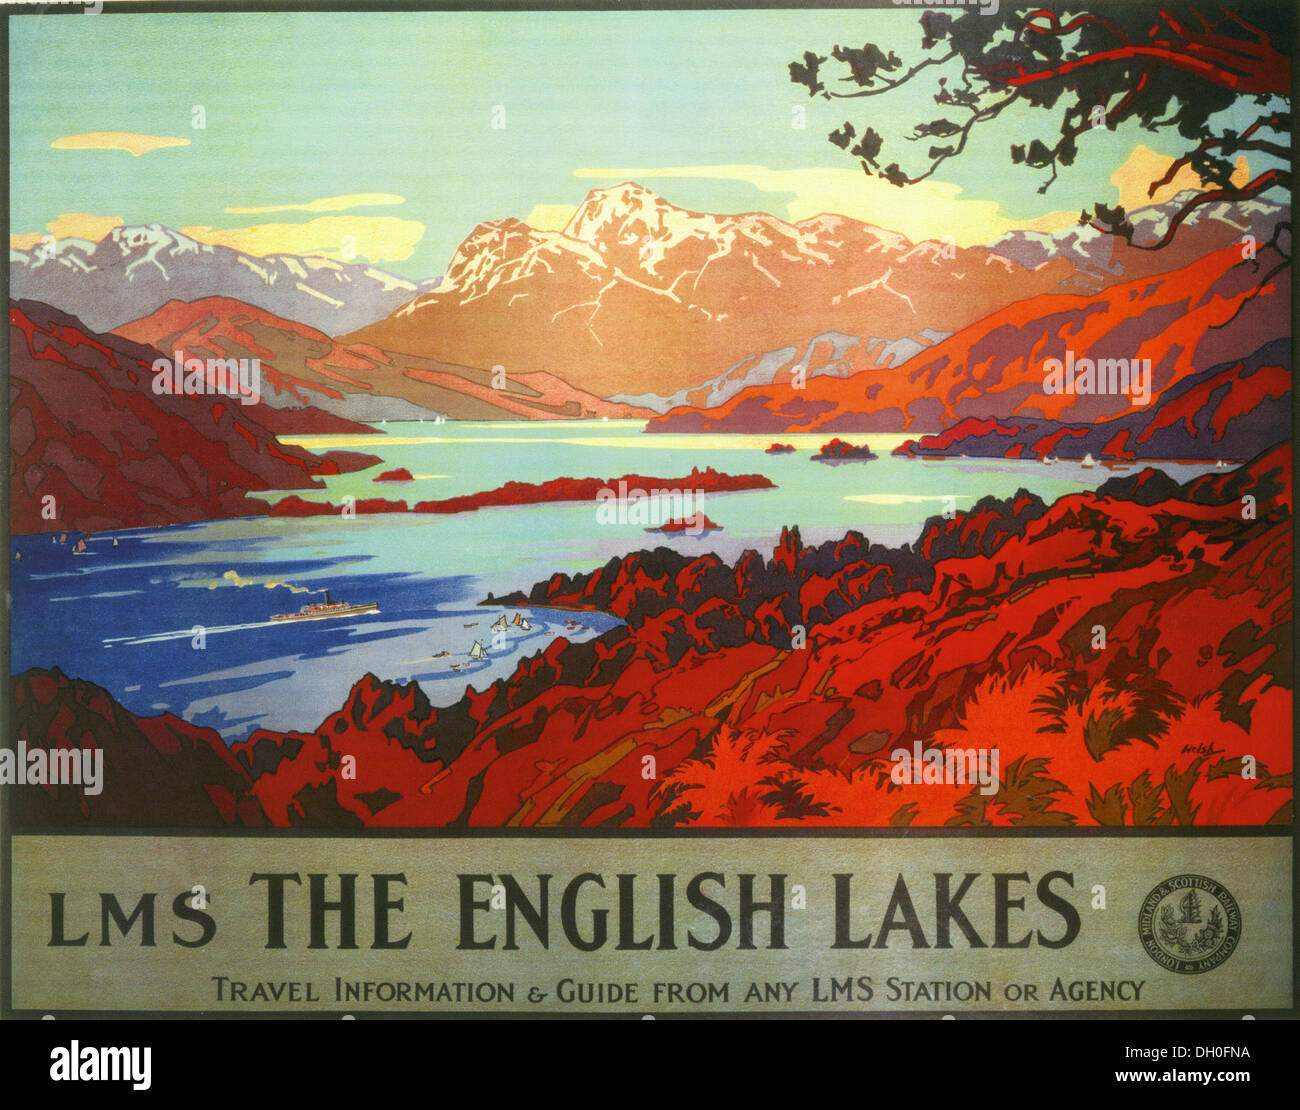 LAKE DISTRICT London Midland & Scottish Railway advert about 1925 promoting the English Lake District Stock Photo